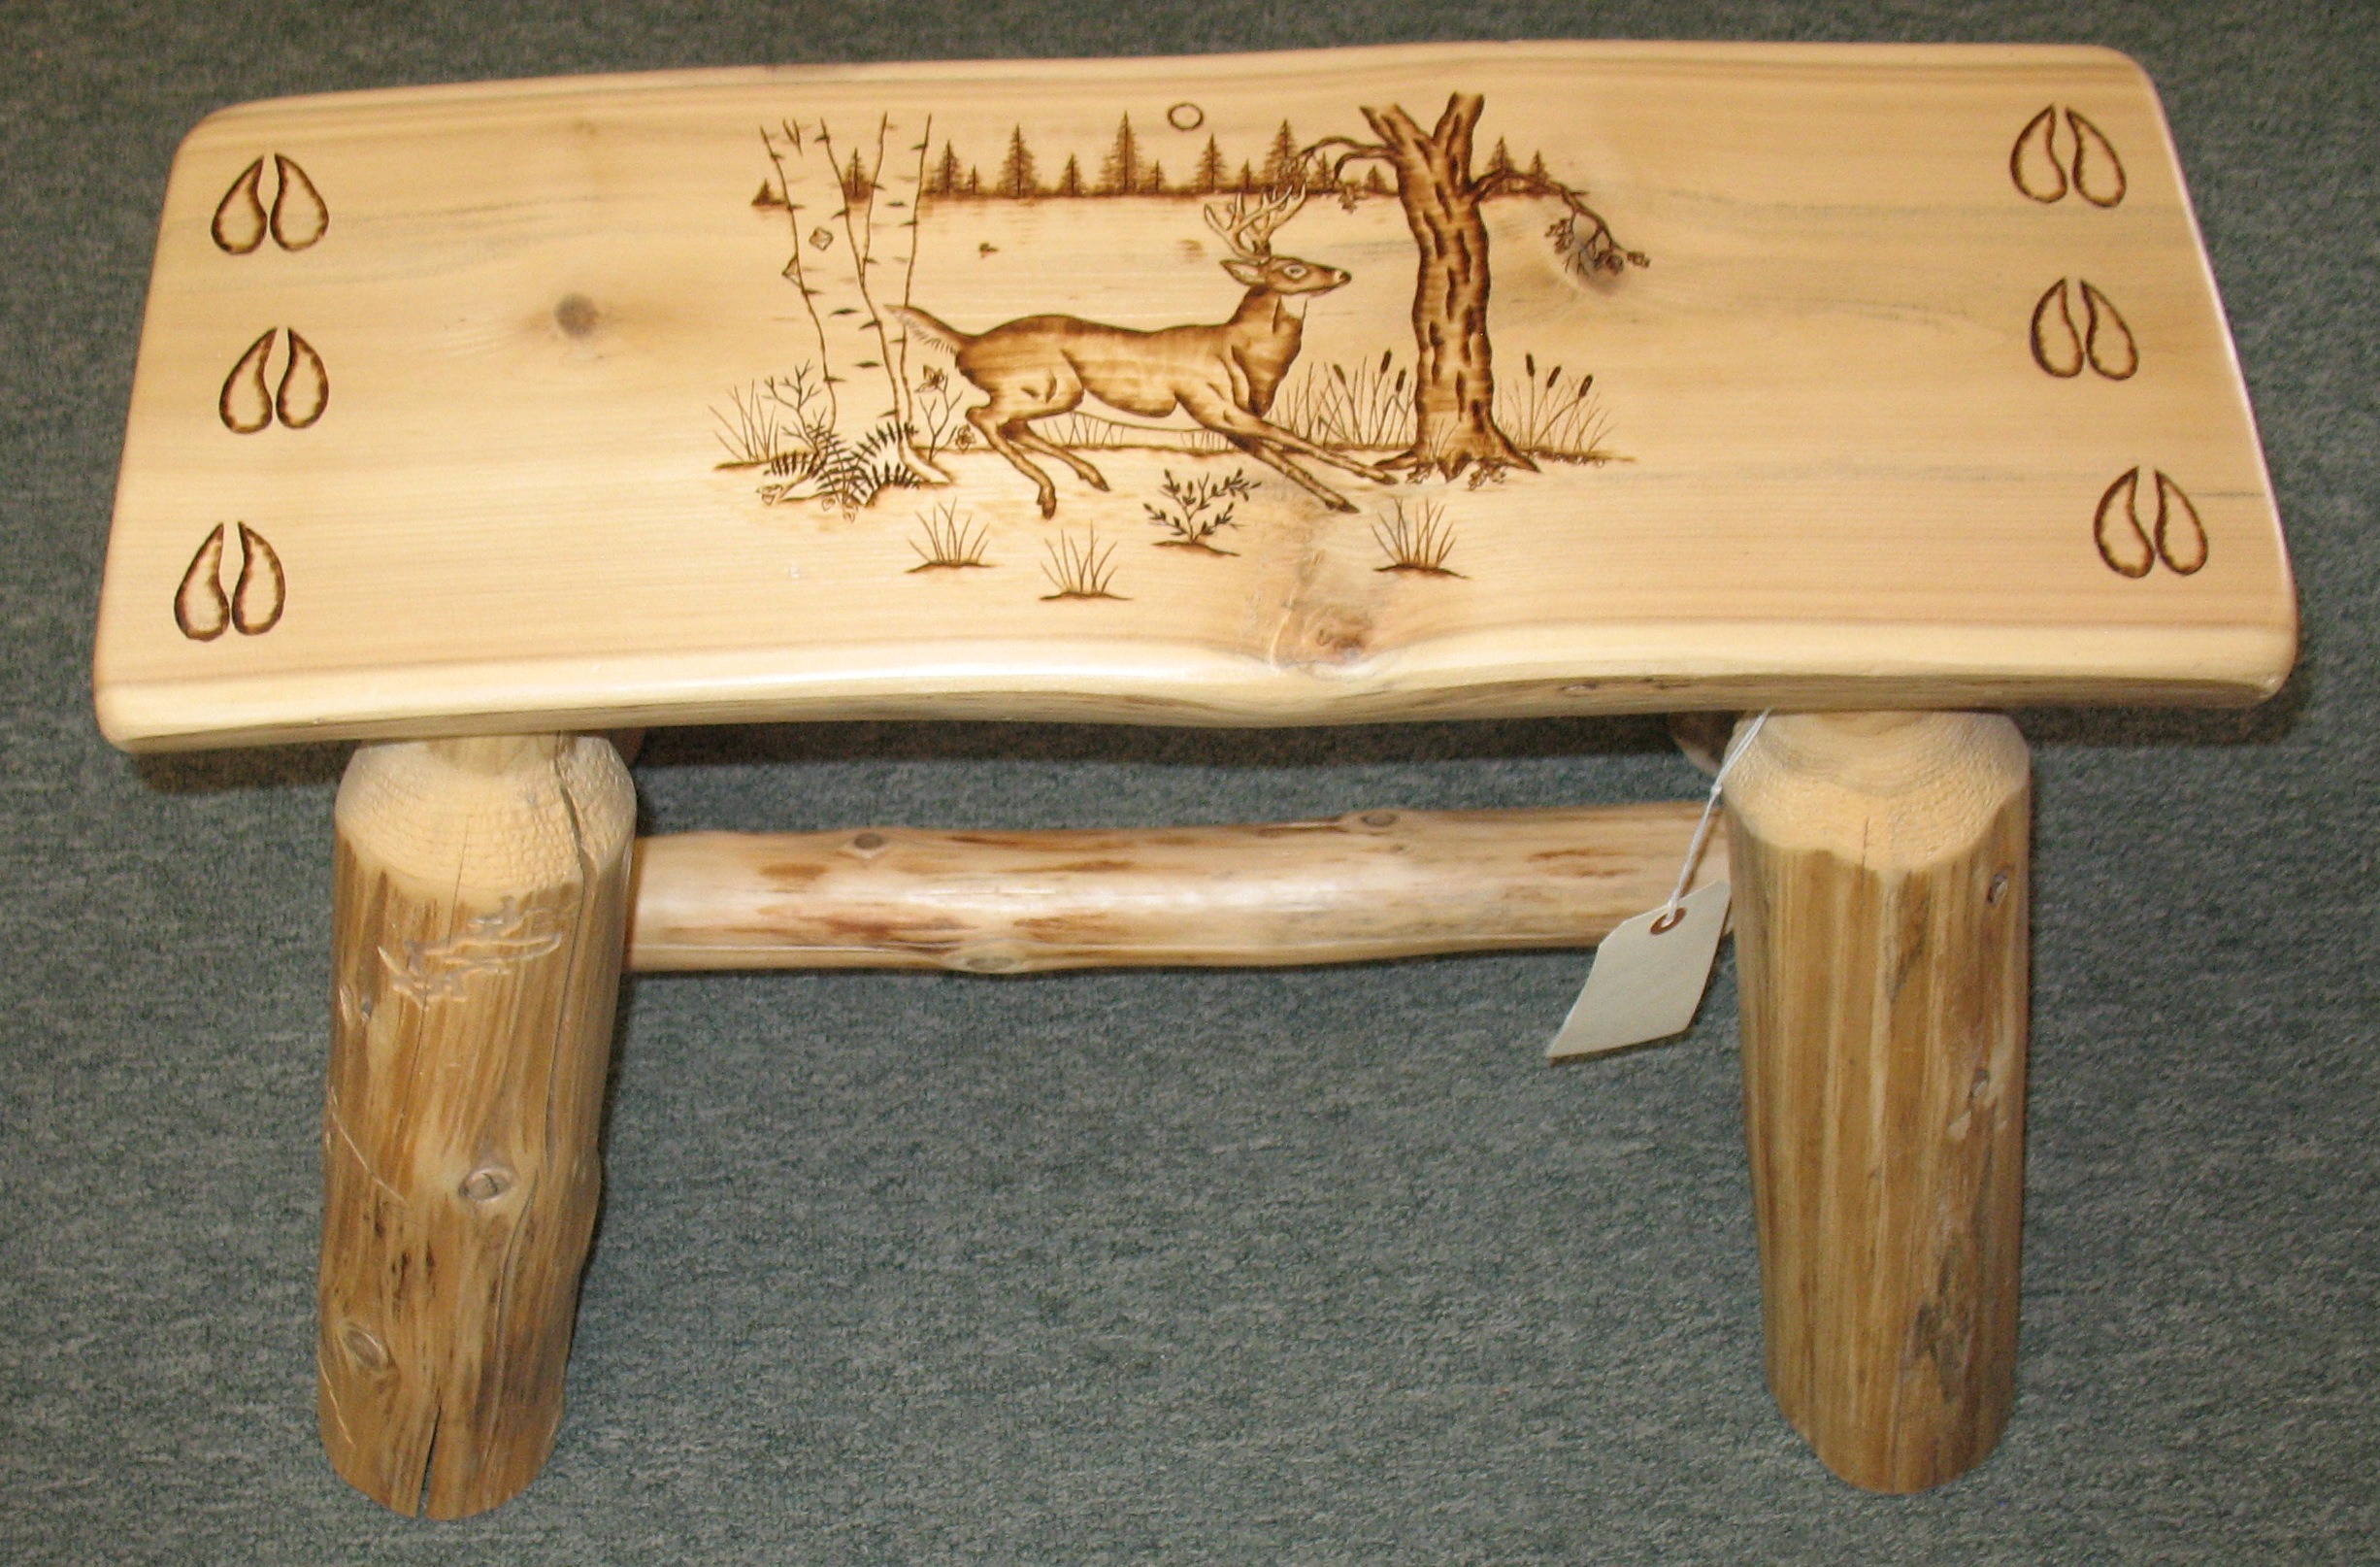 Wood stool with deer wood burning decoration